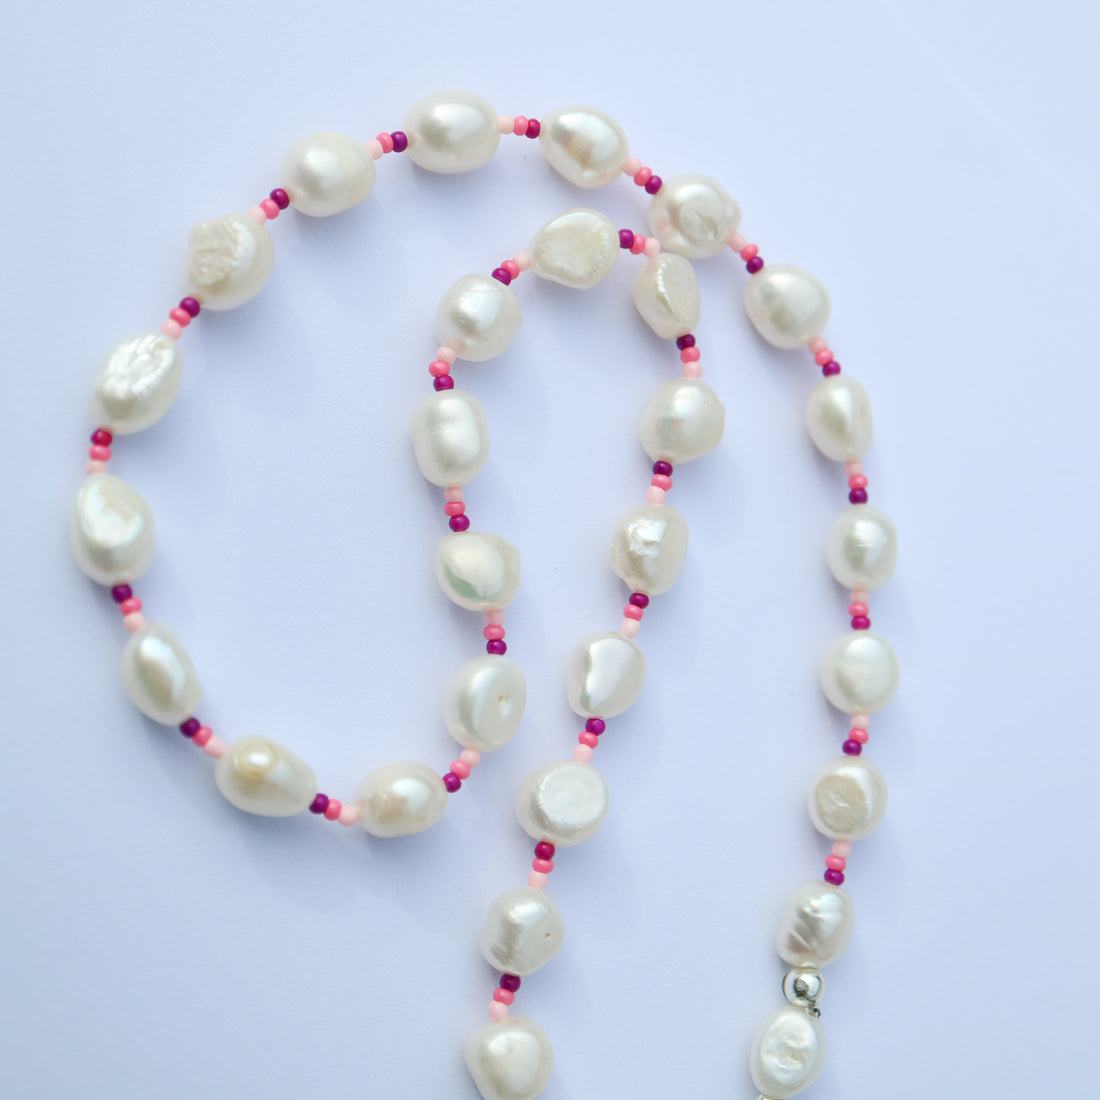 Grandma's Pearls, now for Modern Girls